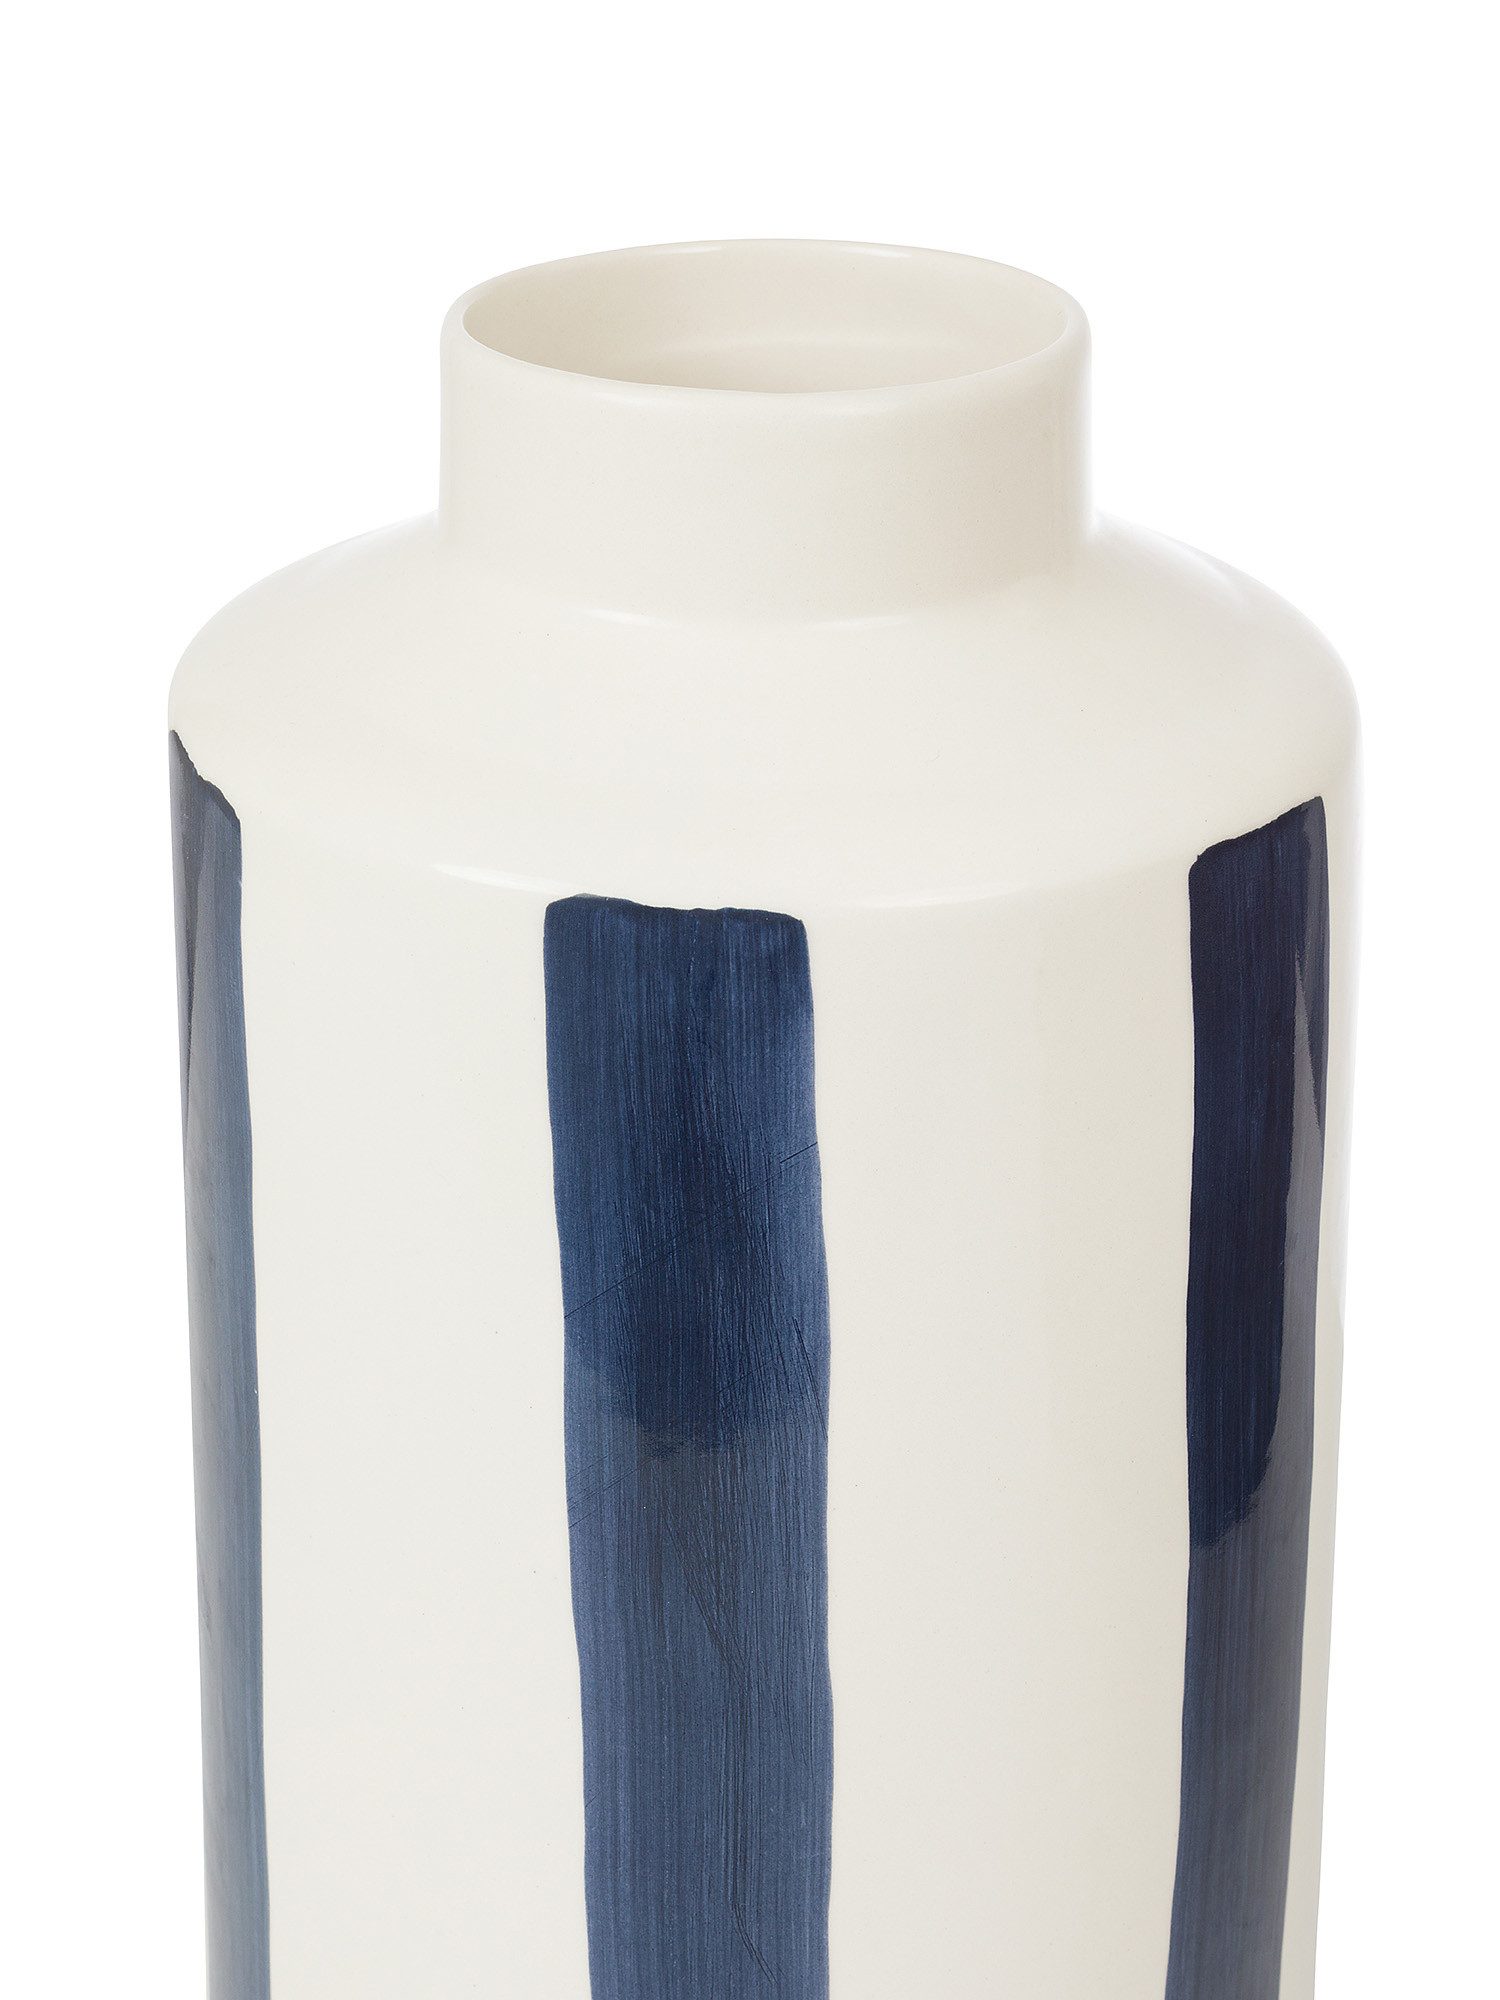 Handcrafted ceramic vase, White, large image number 1